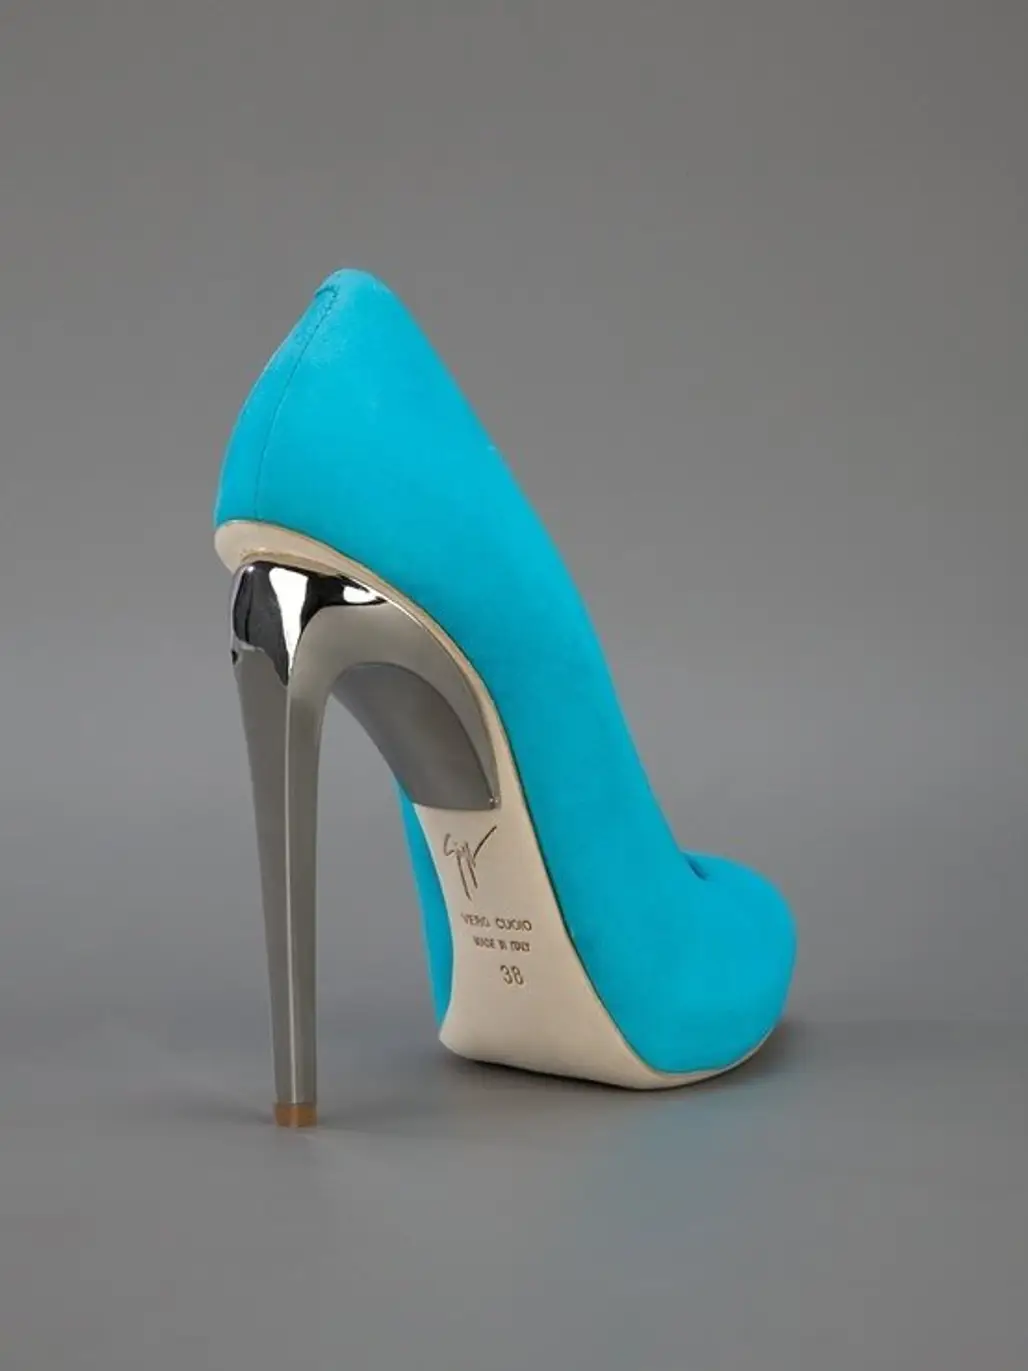 high heeled footwear,footwear,turquoise,blue,green,